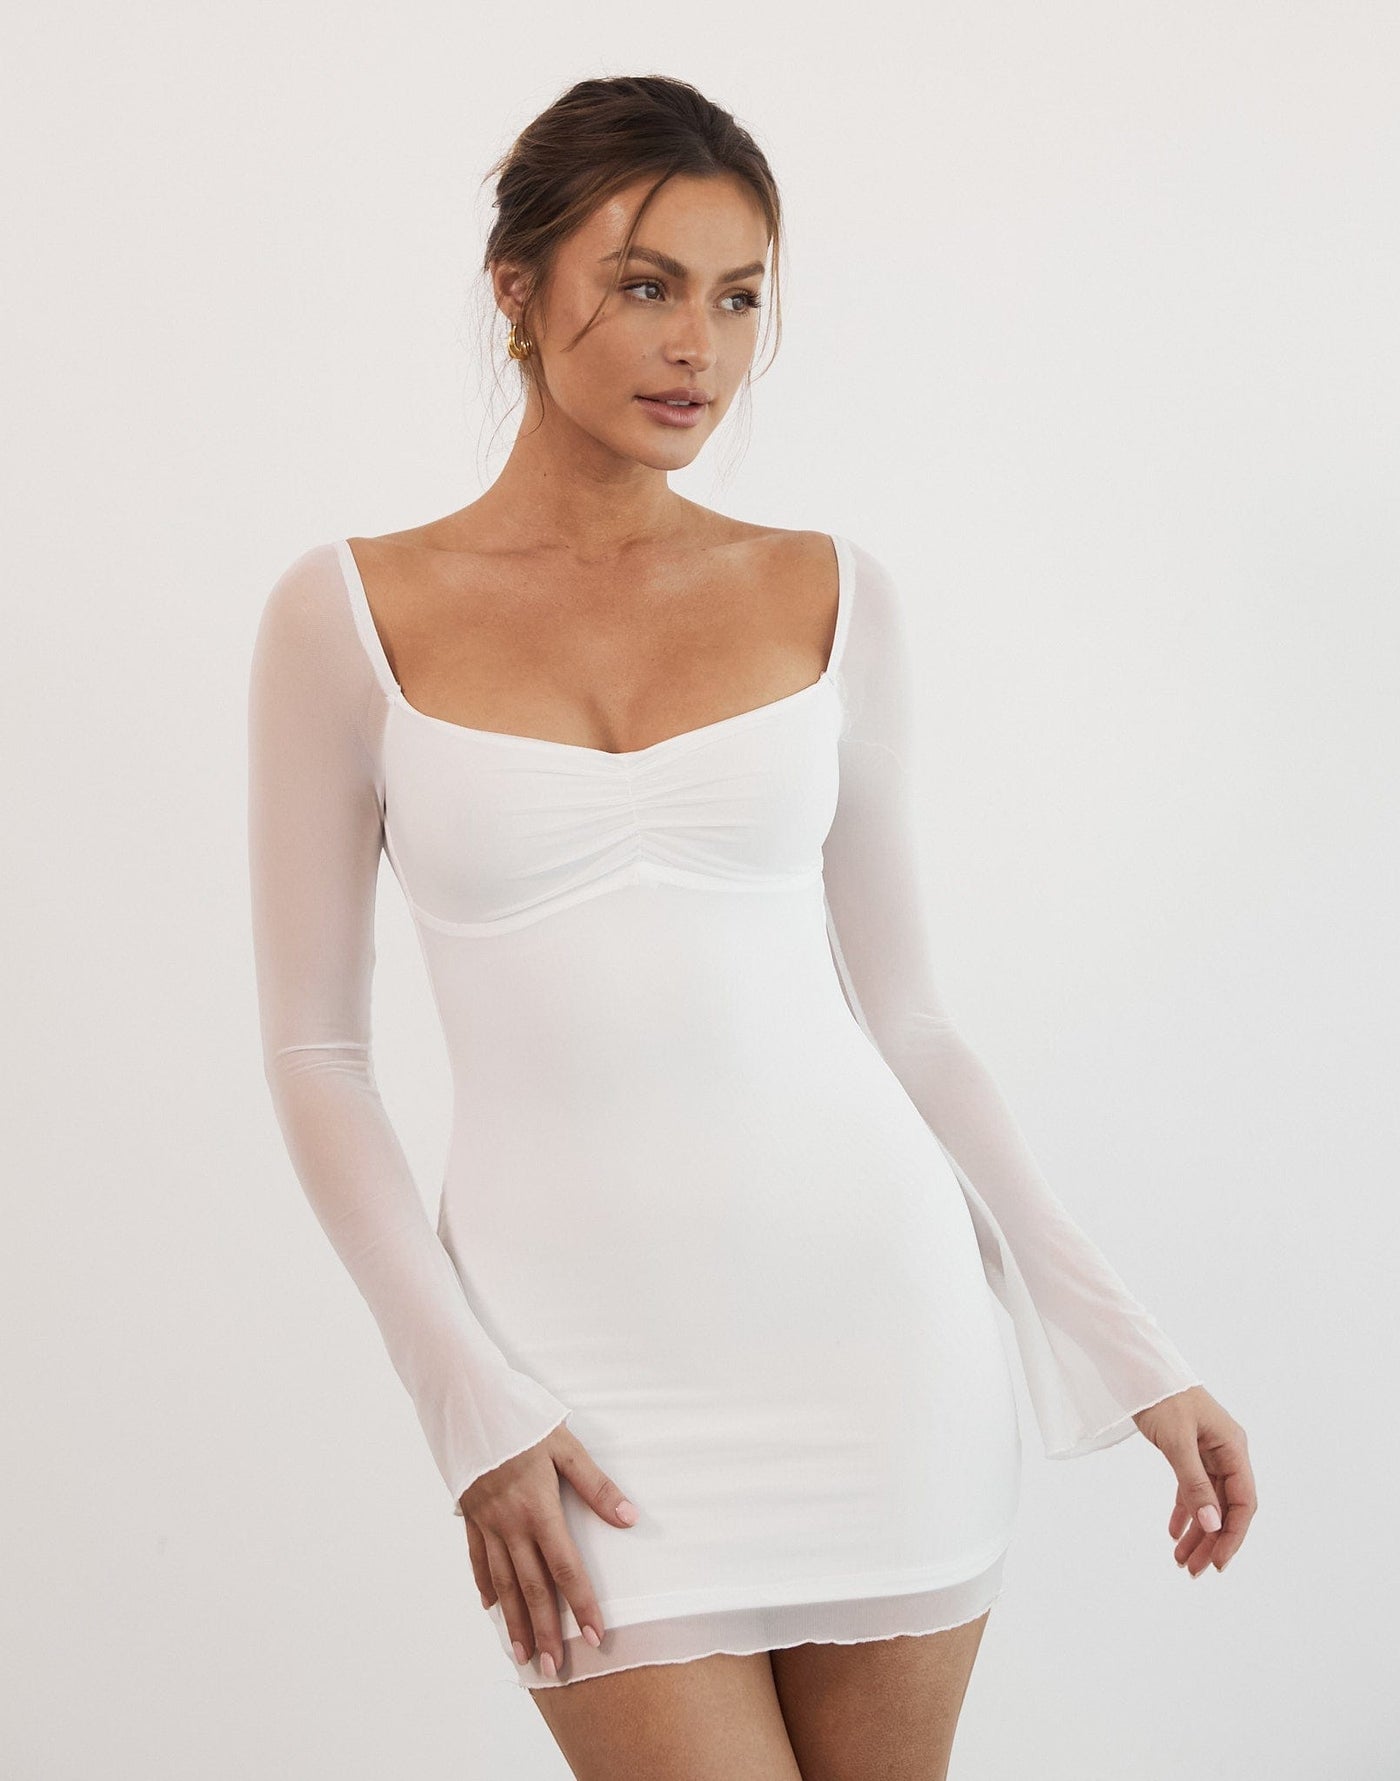 Linden Long Sleeve Mini Dress (White) - Sheer Sleeved Mini Dress - Women's Dress - Charcoal Clothing